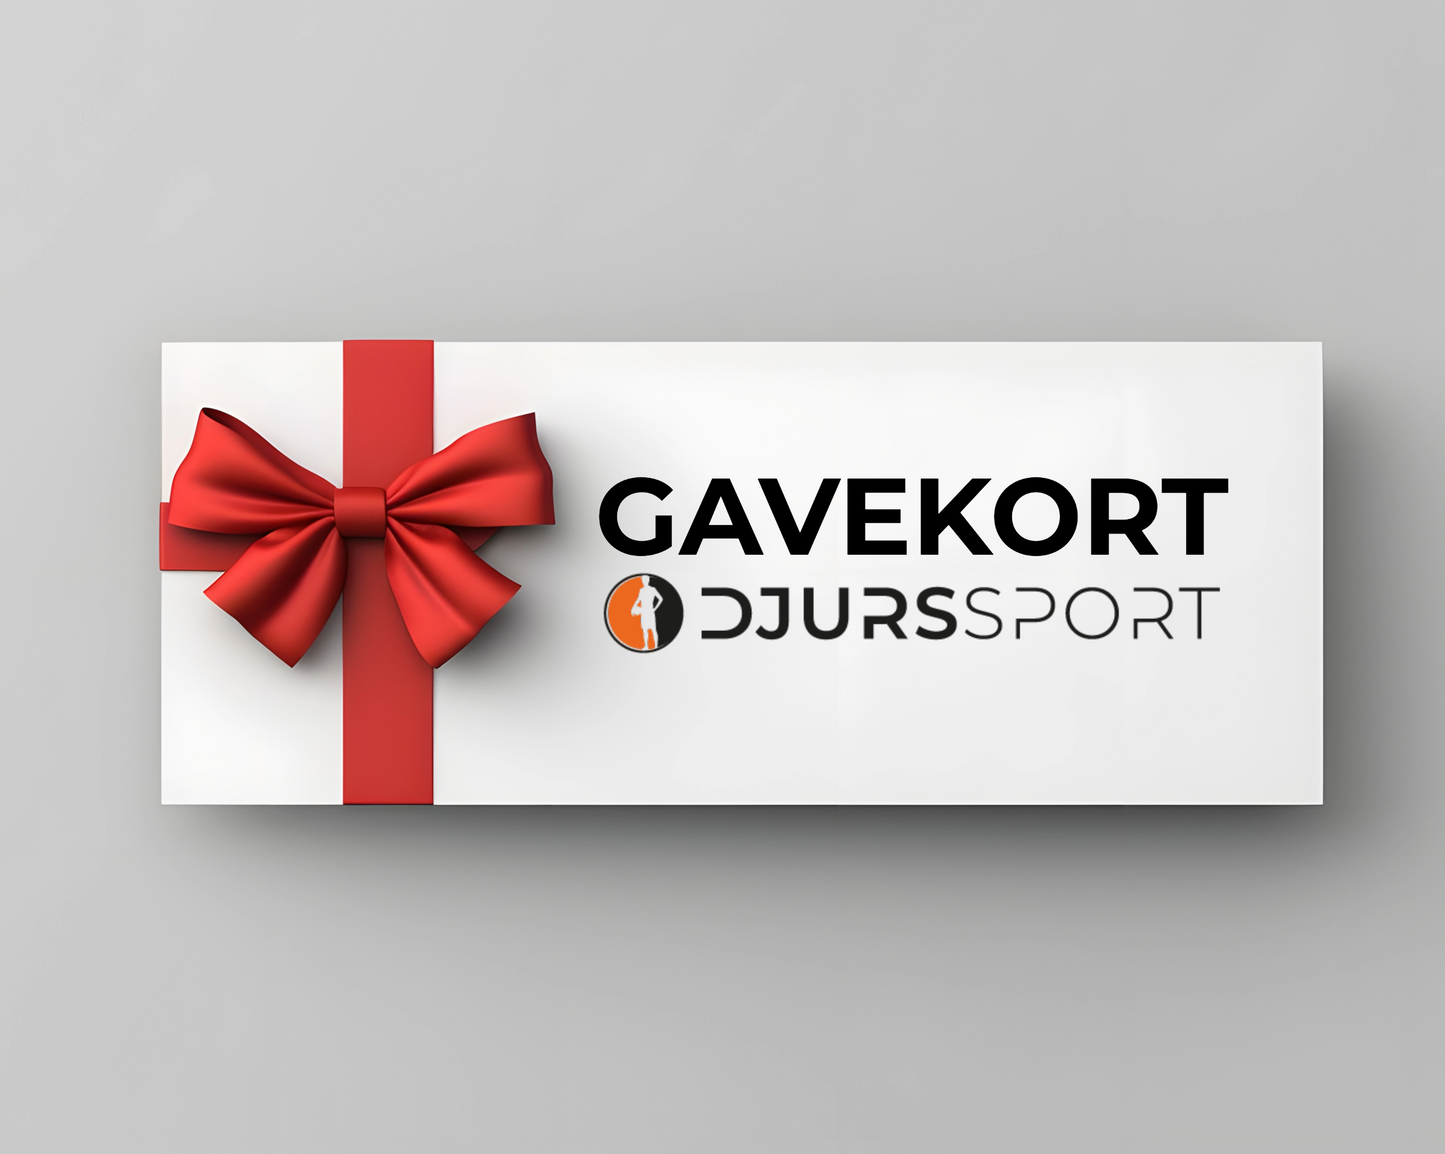 Gavekort - Djurssport ApS